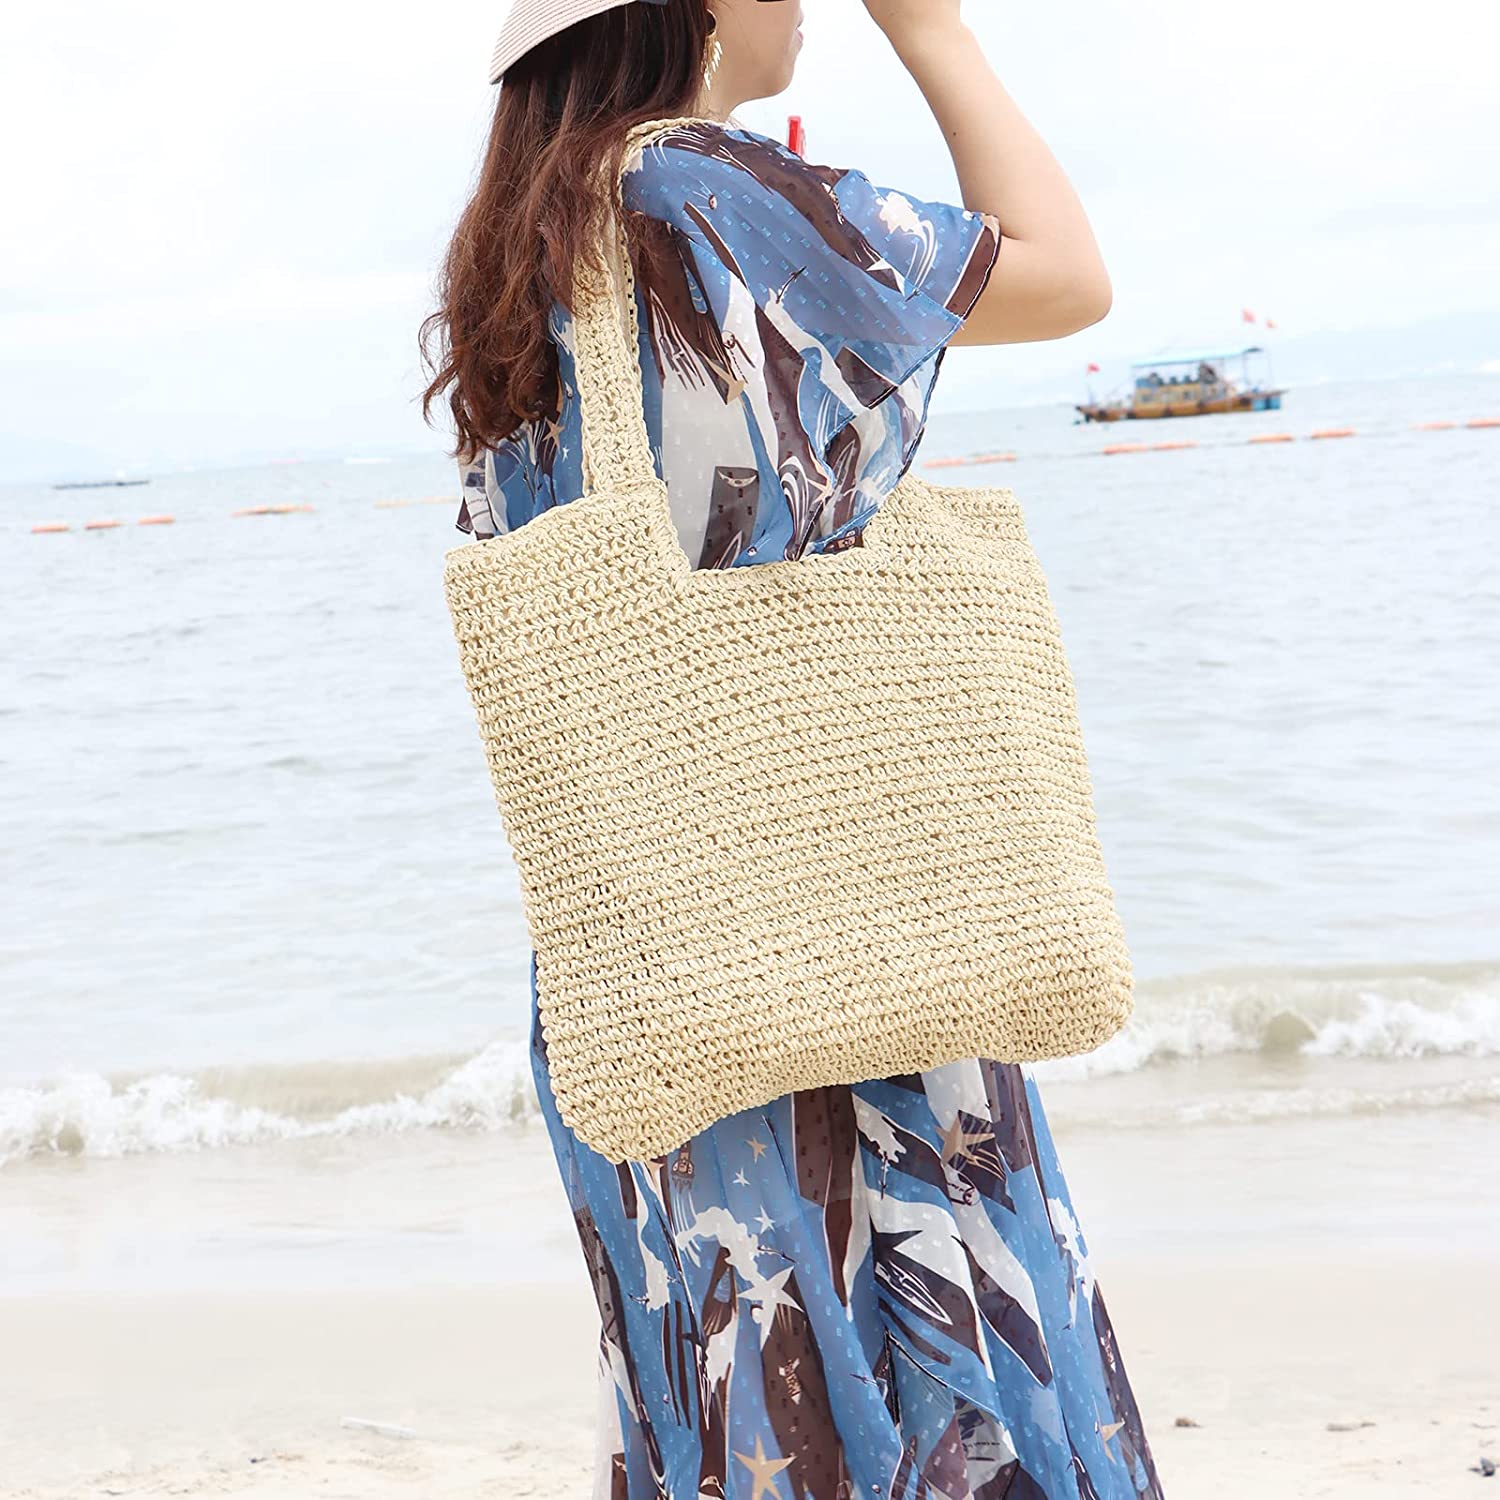 Straw Beach Tote Bag for Women Large Summer Woven Tote Bag Shoulder Handbags